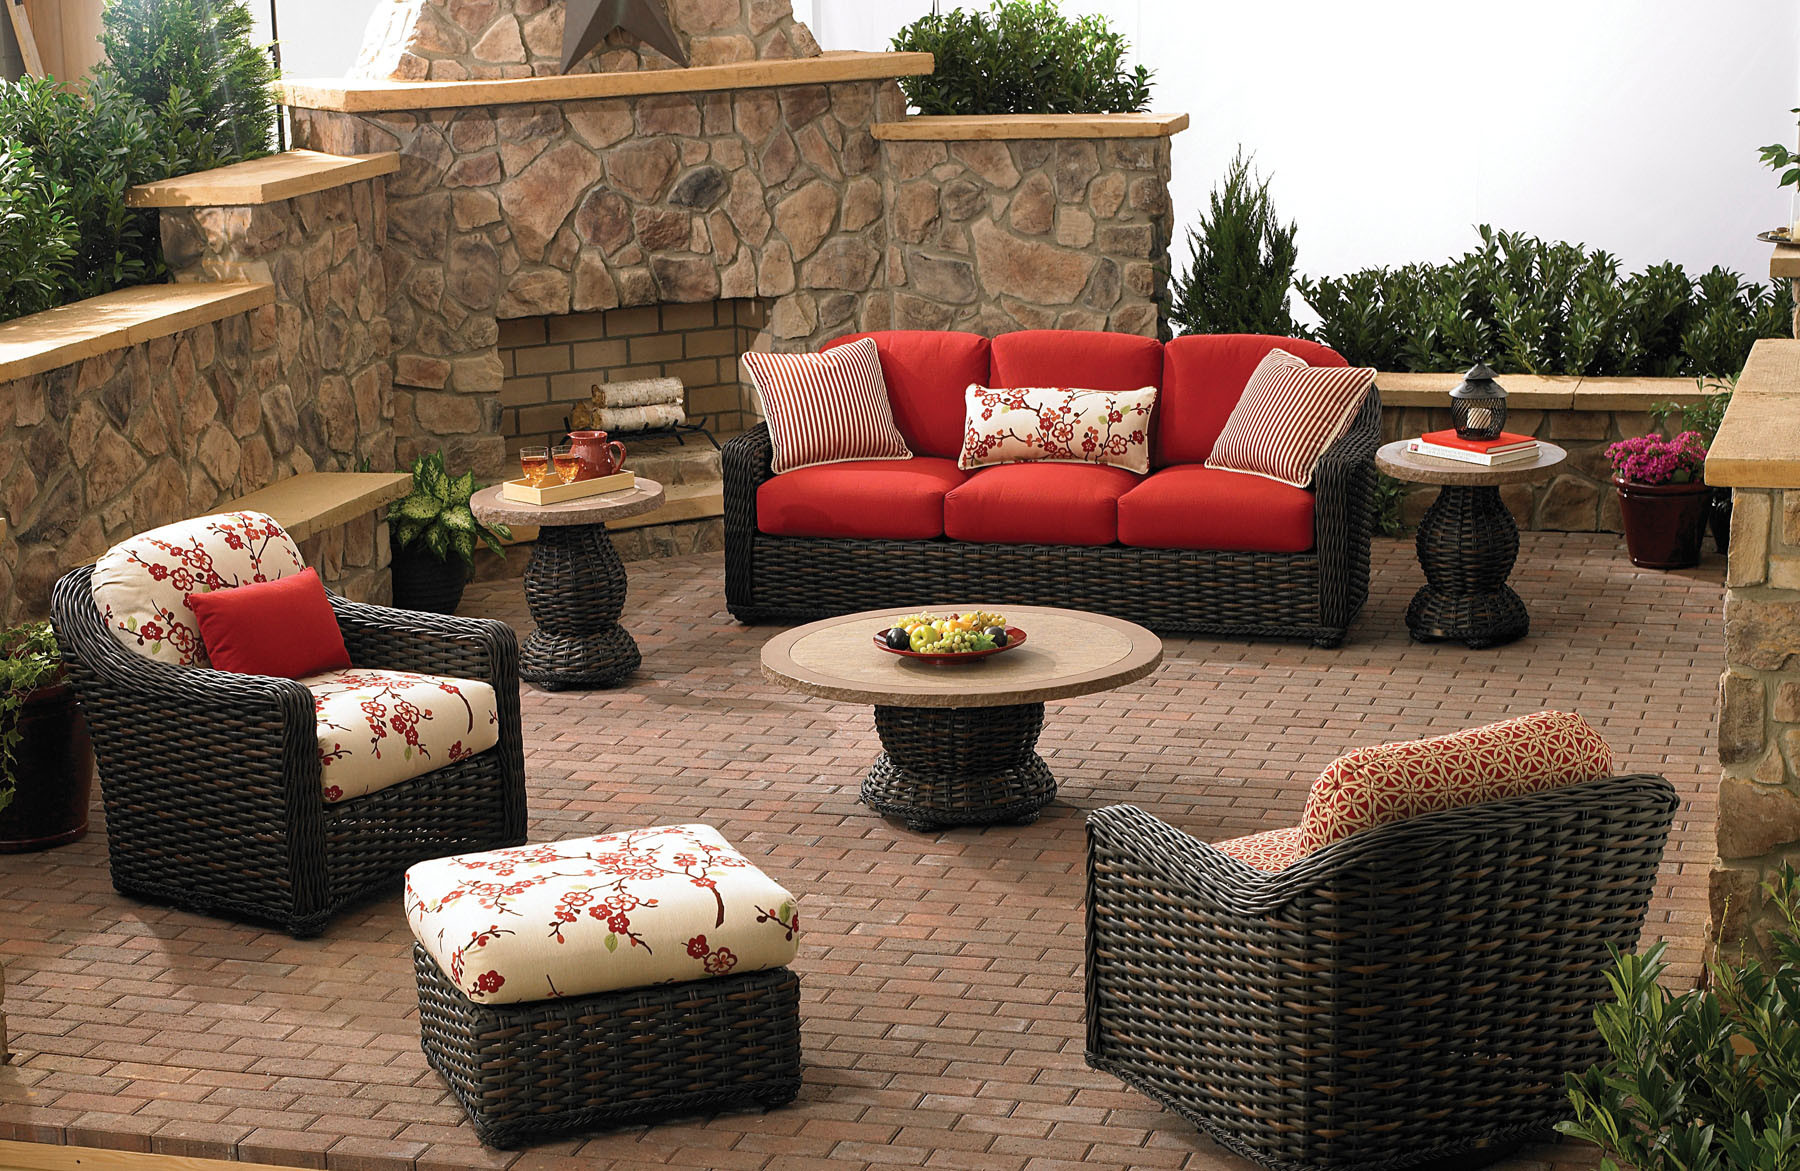 Backyard Furniture Sets
 Outdoor Furniture & Patio Furniture Sets in Carefree AZ